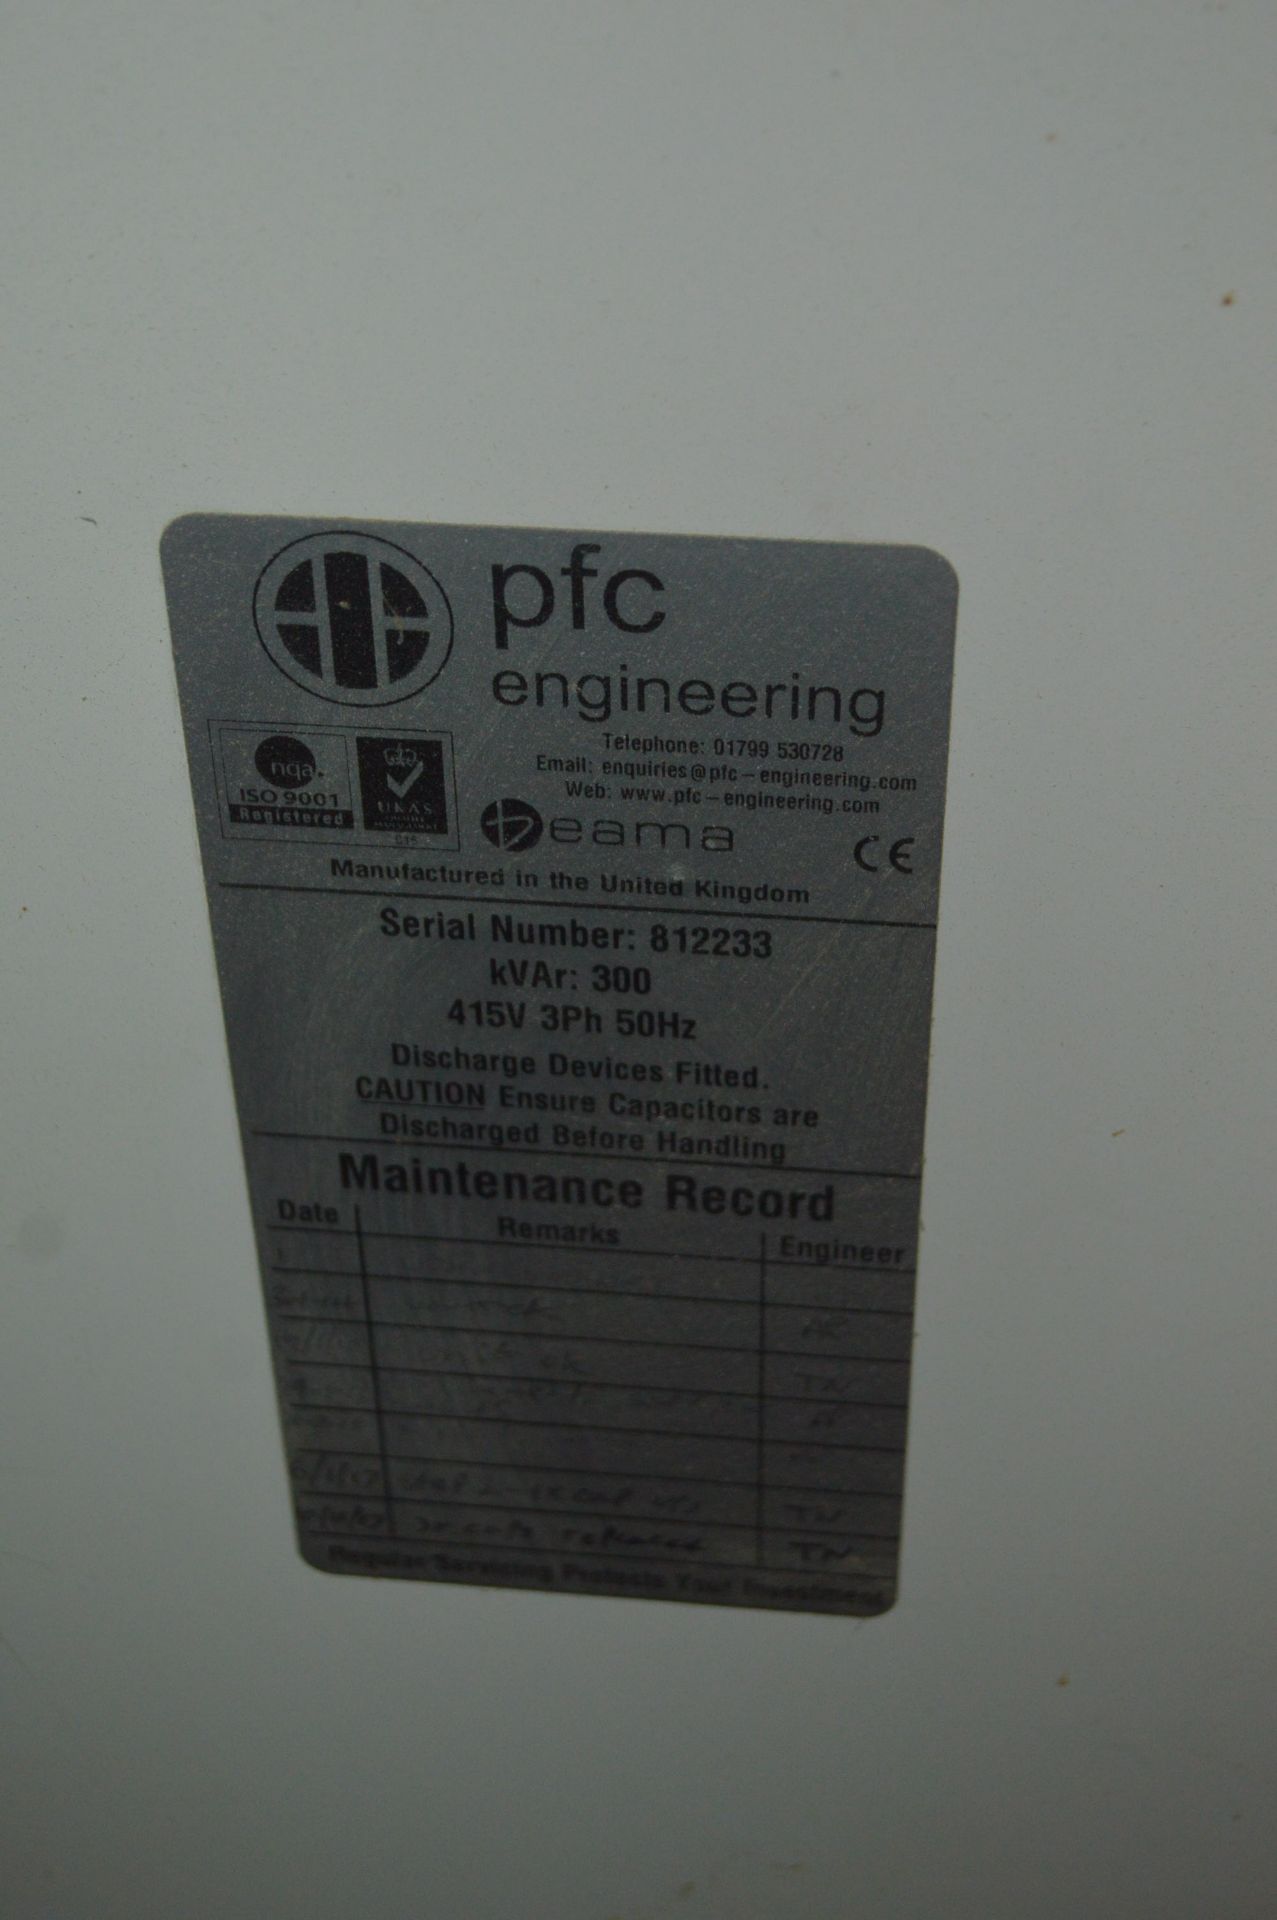 PFC Engineering 300kVAr POWER FACTOR CORRECTION UNIT, serial no. 812233, 415V, 50Hz, understood to - Image 2 of 2